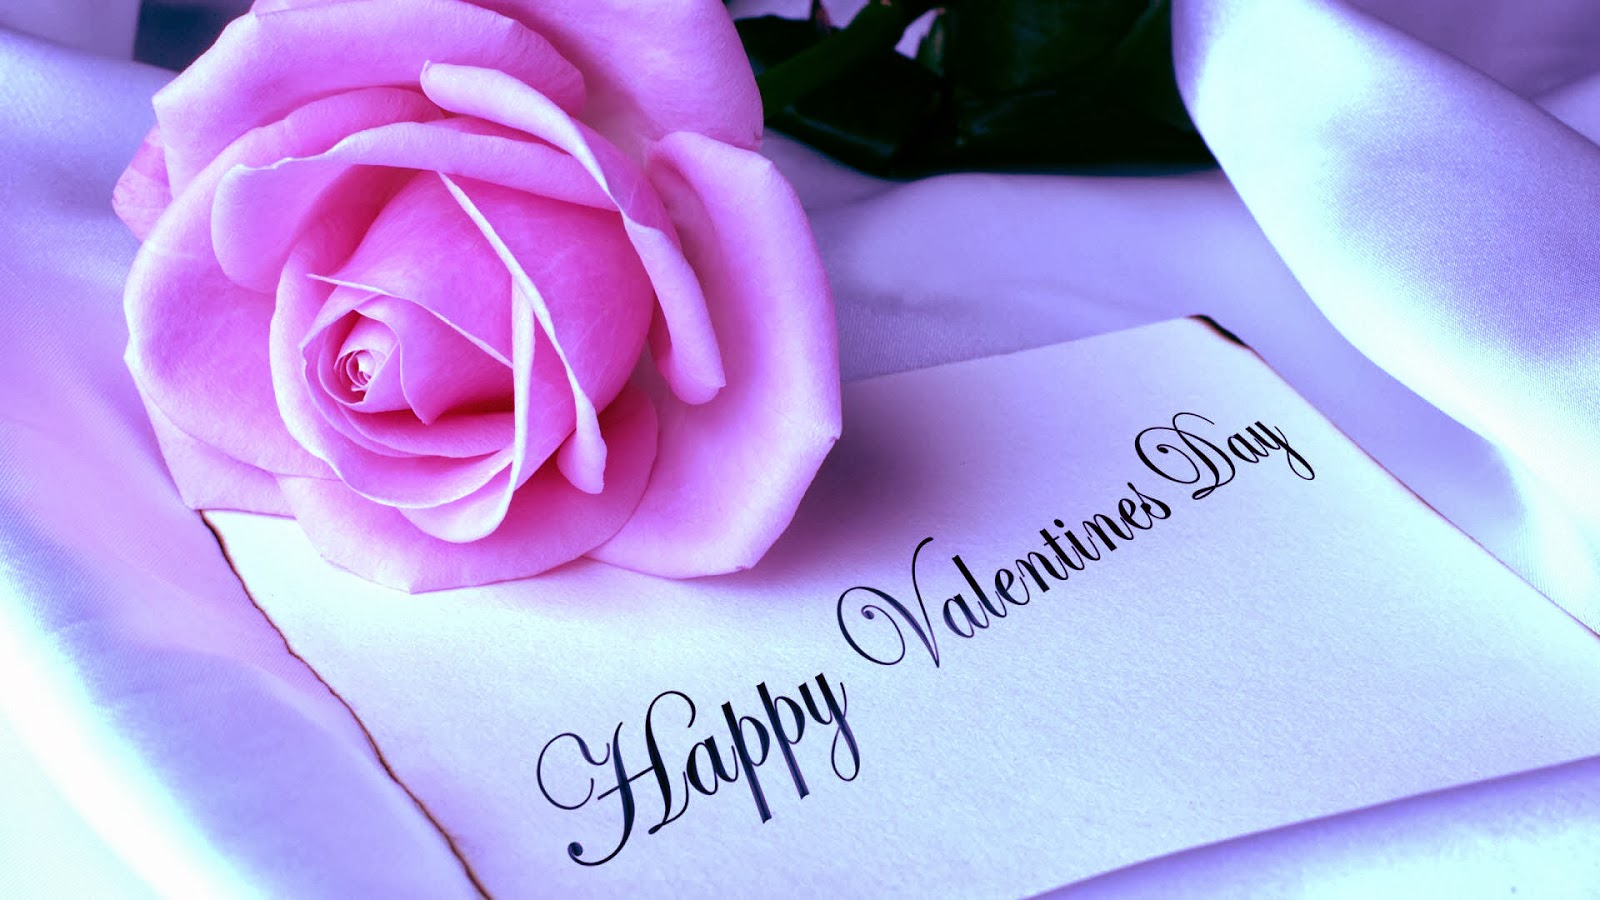 Cute Happy Valentines Day - HD Wallpaper 